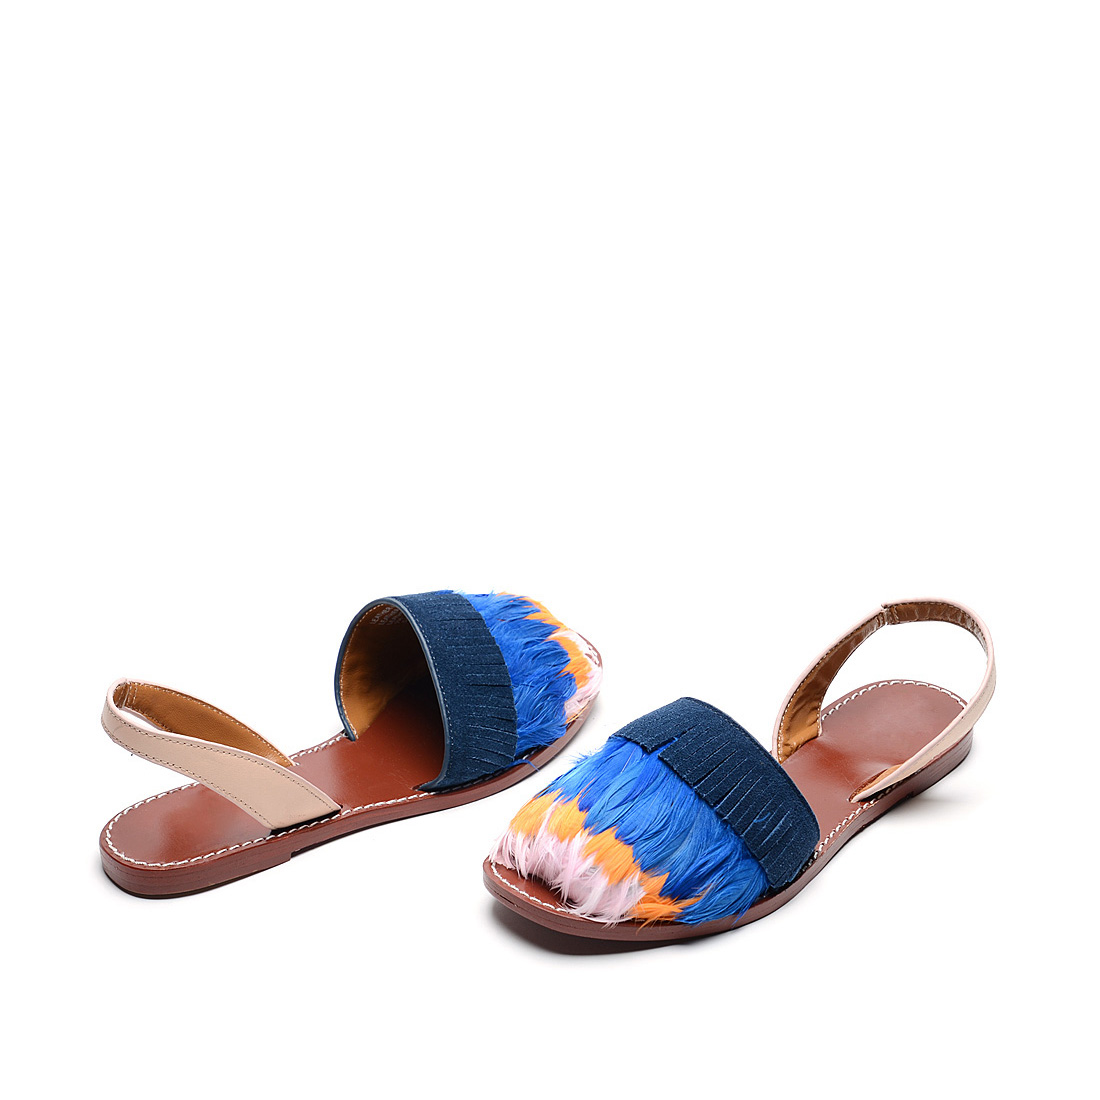 [Fovilla]欧美风简约进口特殊面料凉鞋(尺码标准)
编号：A0698L1A17